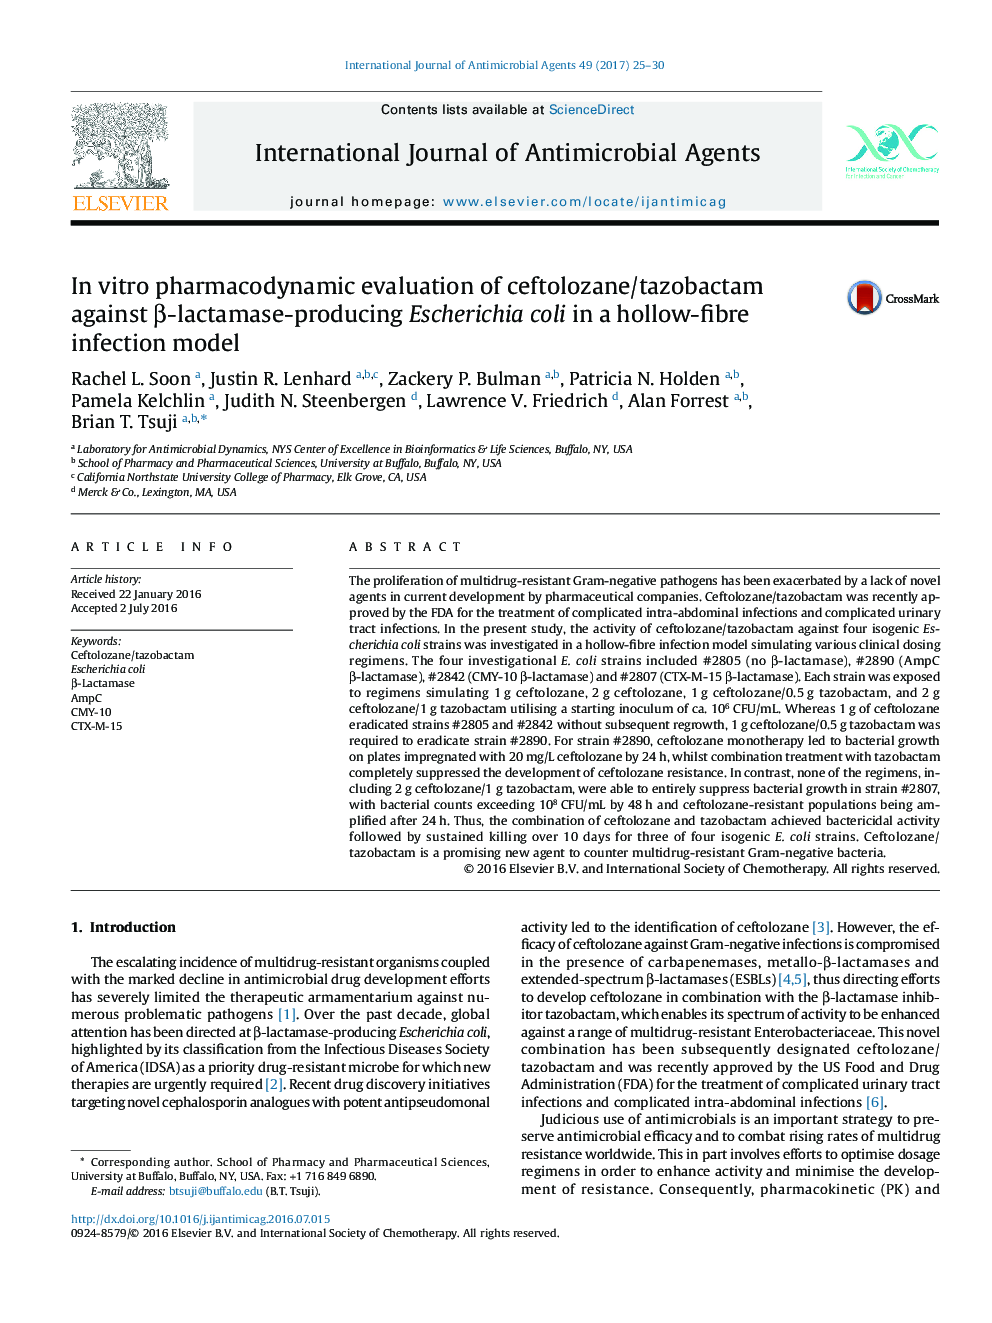 In vitro pharmacodynamic evaluation of ceftolozane/tazobactam against Î²-lactamase-producing Escherichia coli in a hollow-fibre infection model